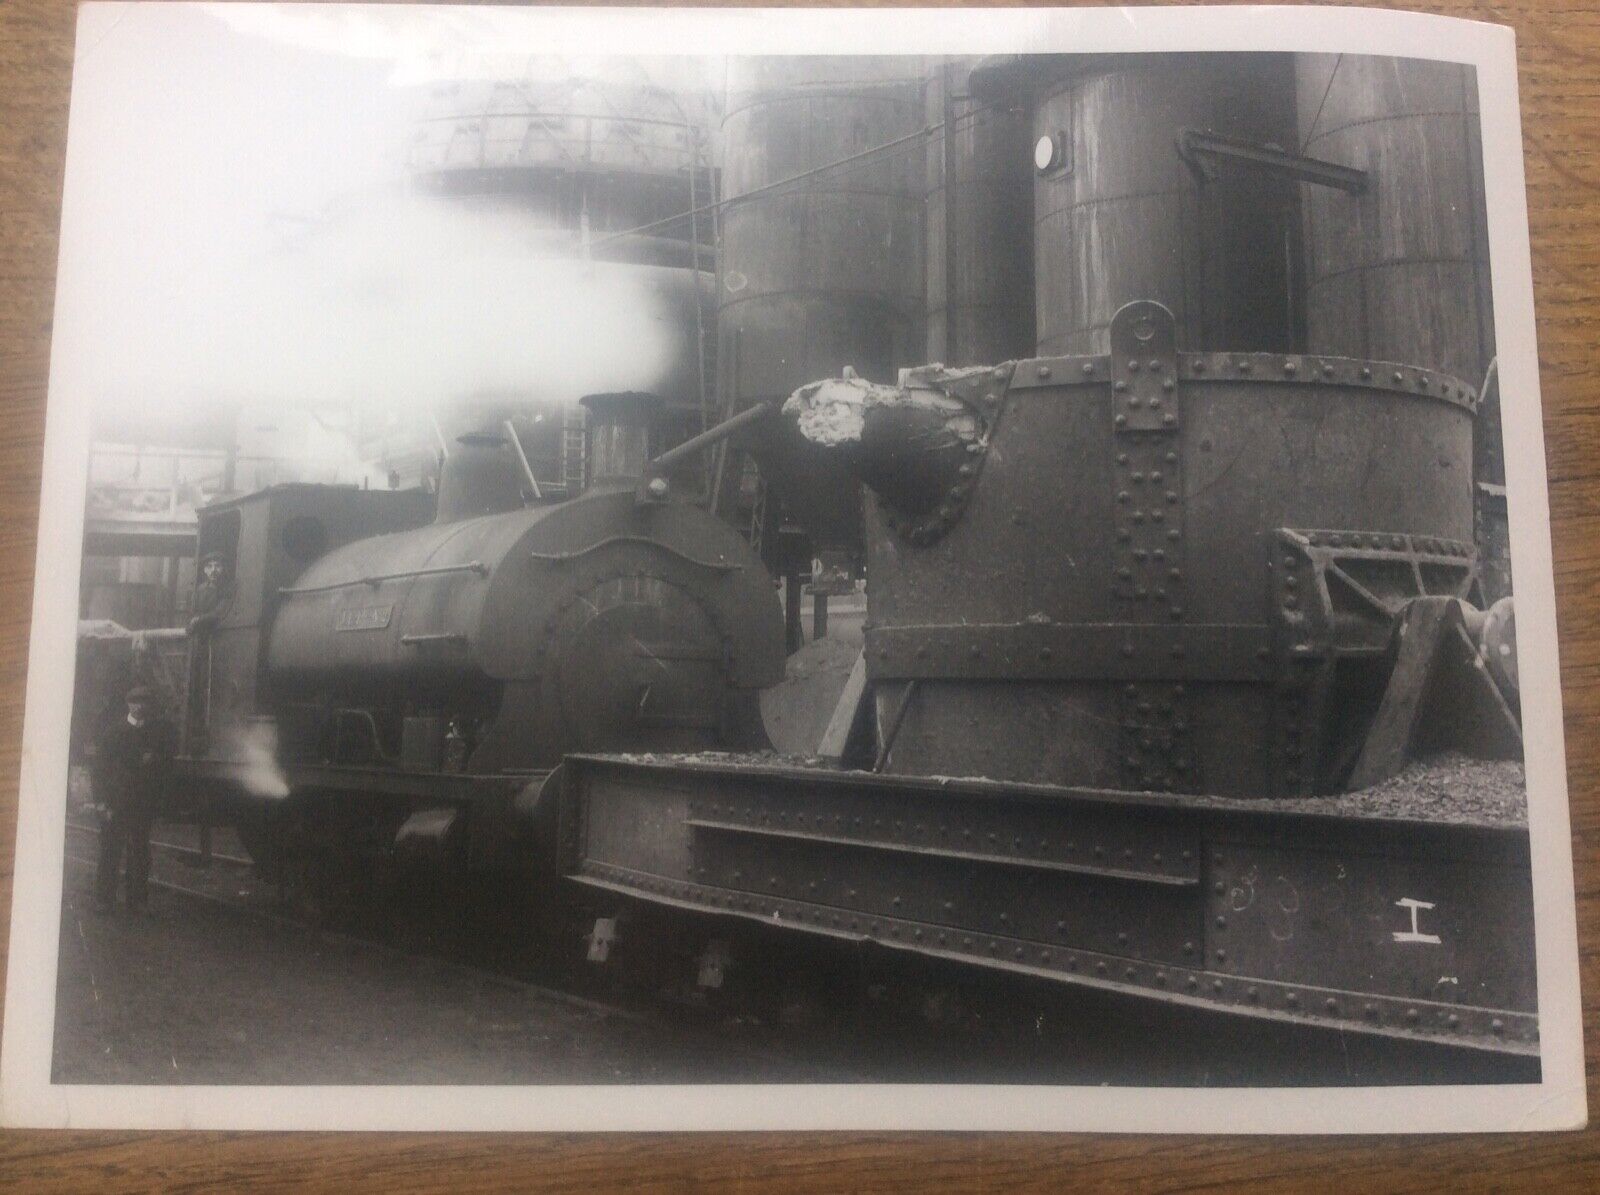 Scunthorpe British Steel Industrial Photograph Print Rail Railway Rail Loco 8x6”